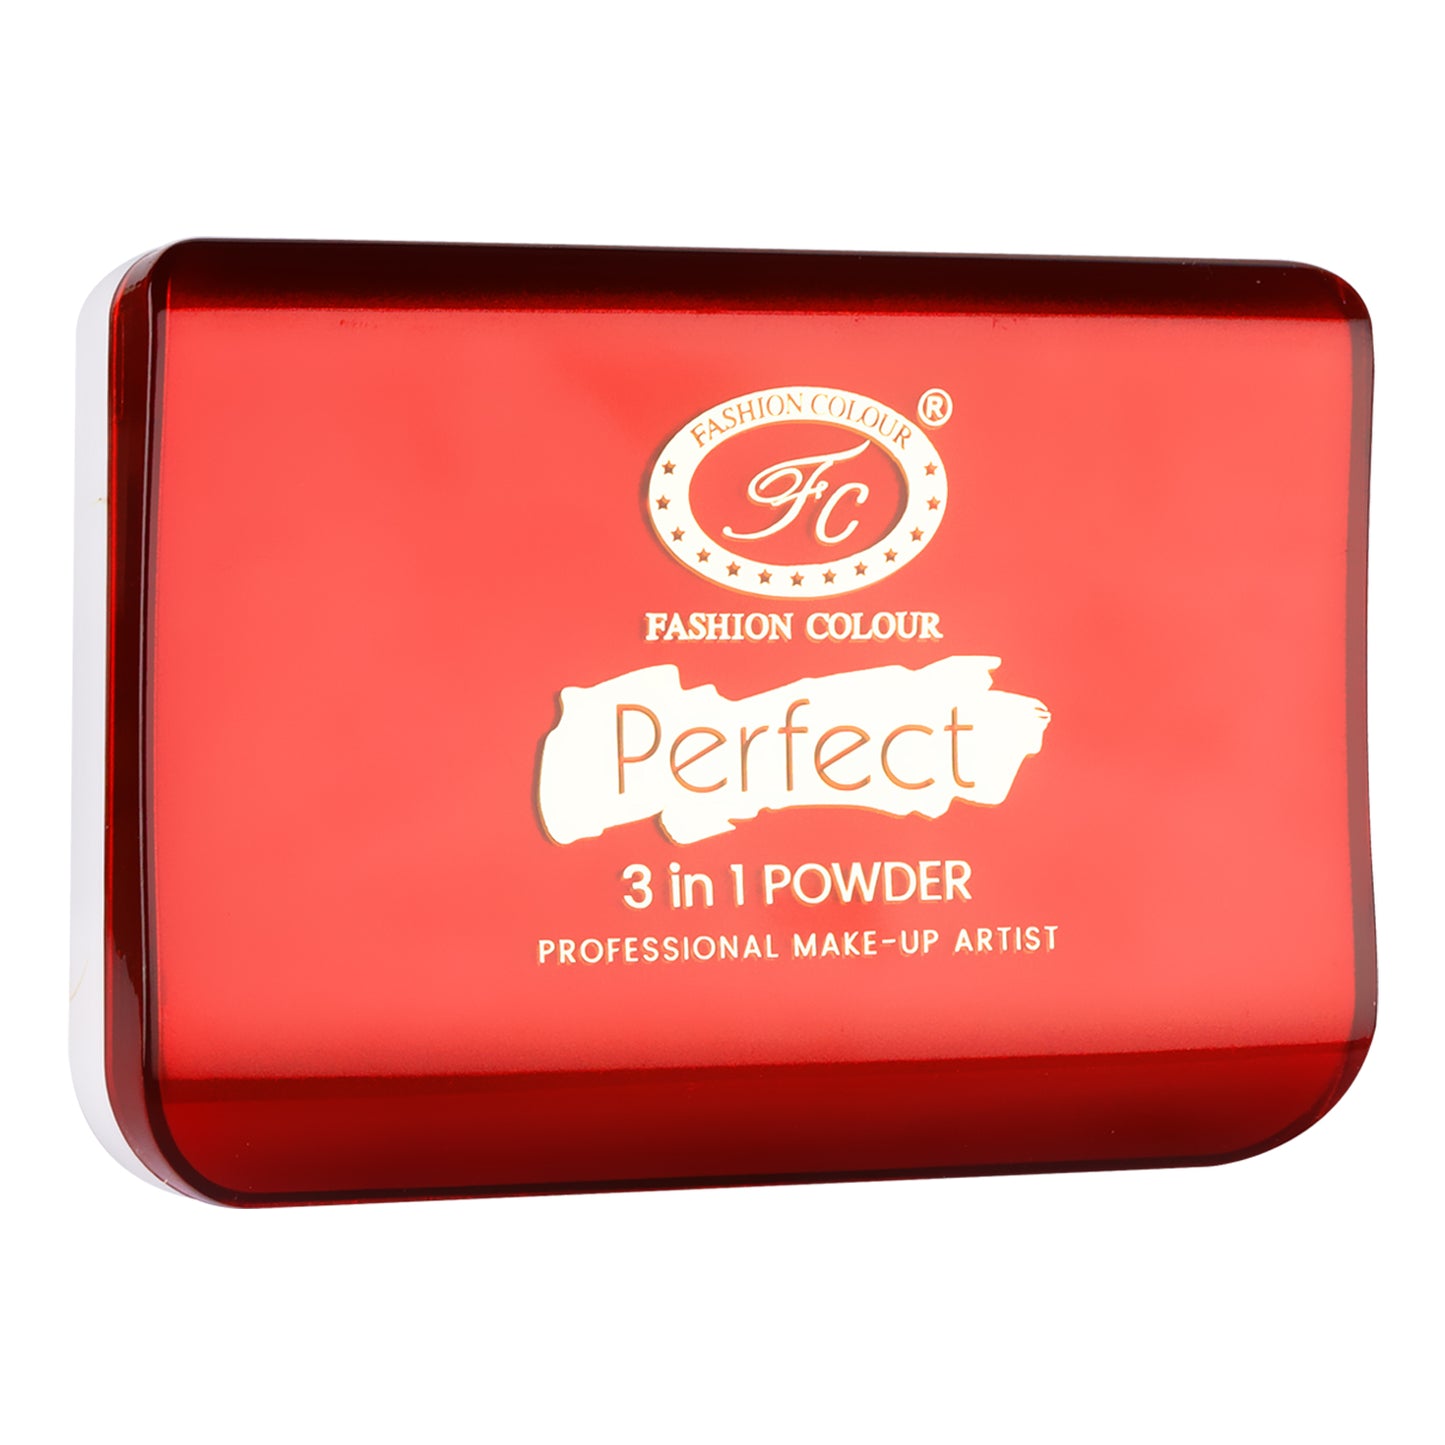 3 IN 1 Perfect Face Powder, Waterproof, Long-lasting, 27G